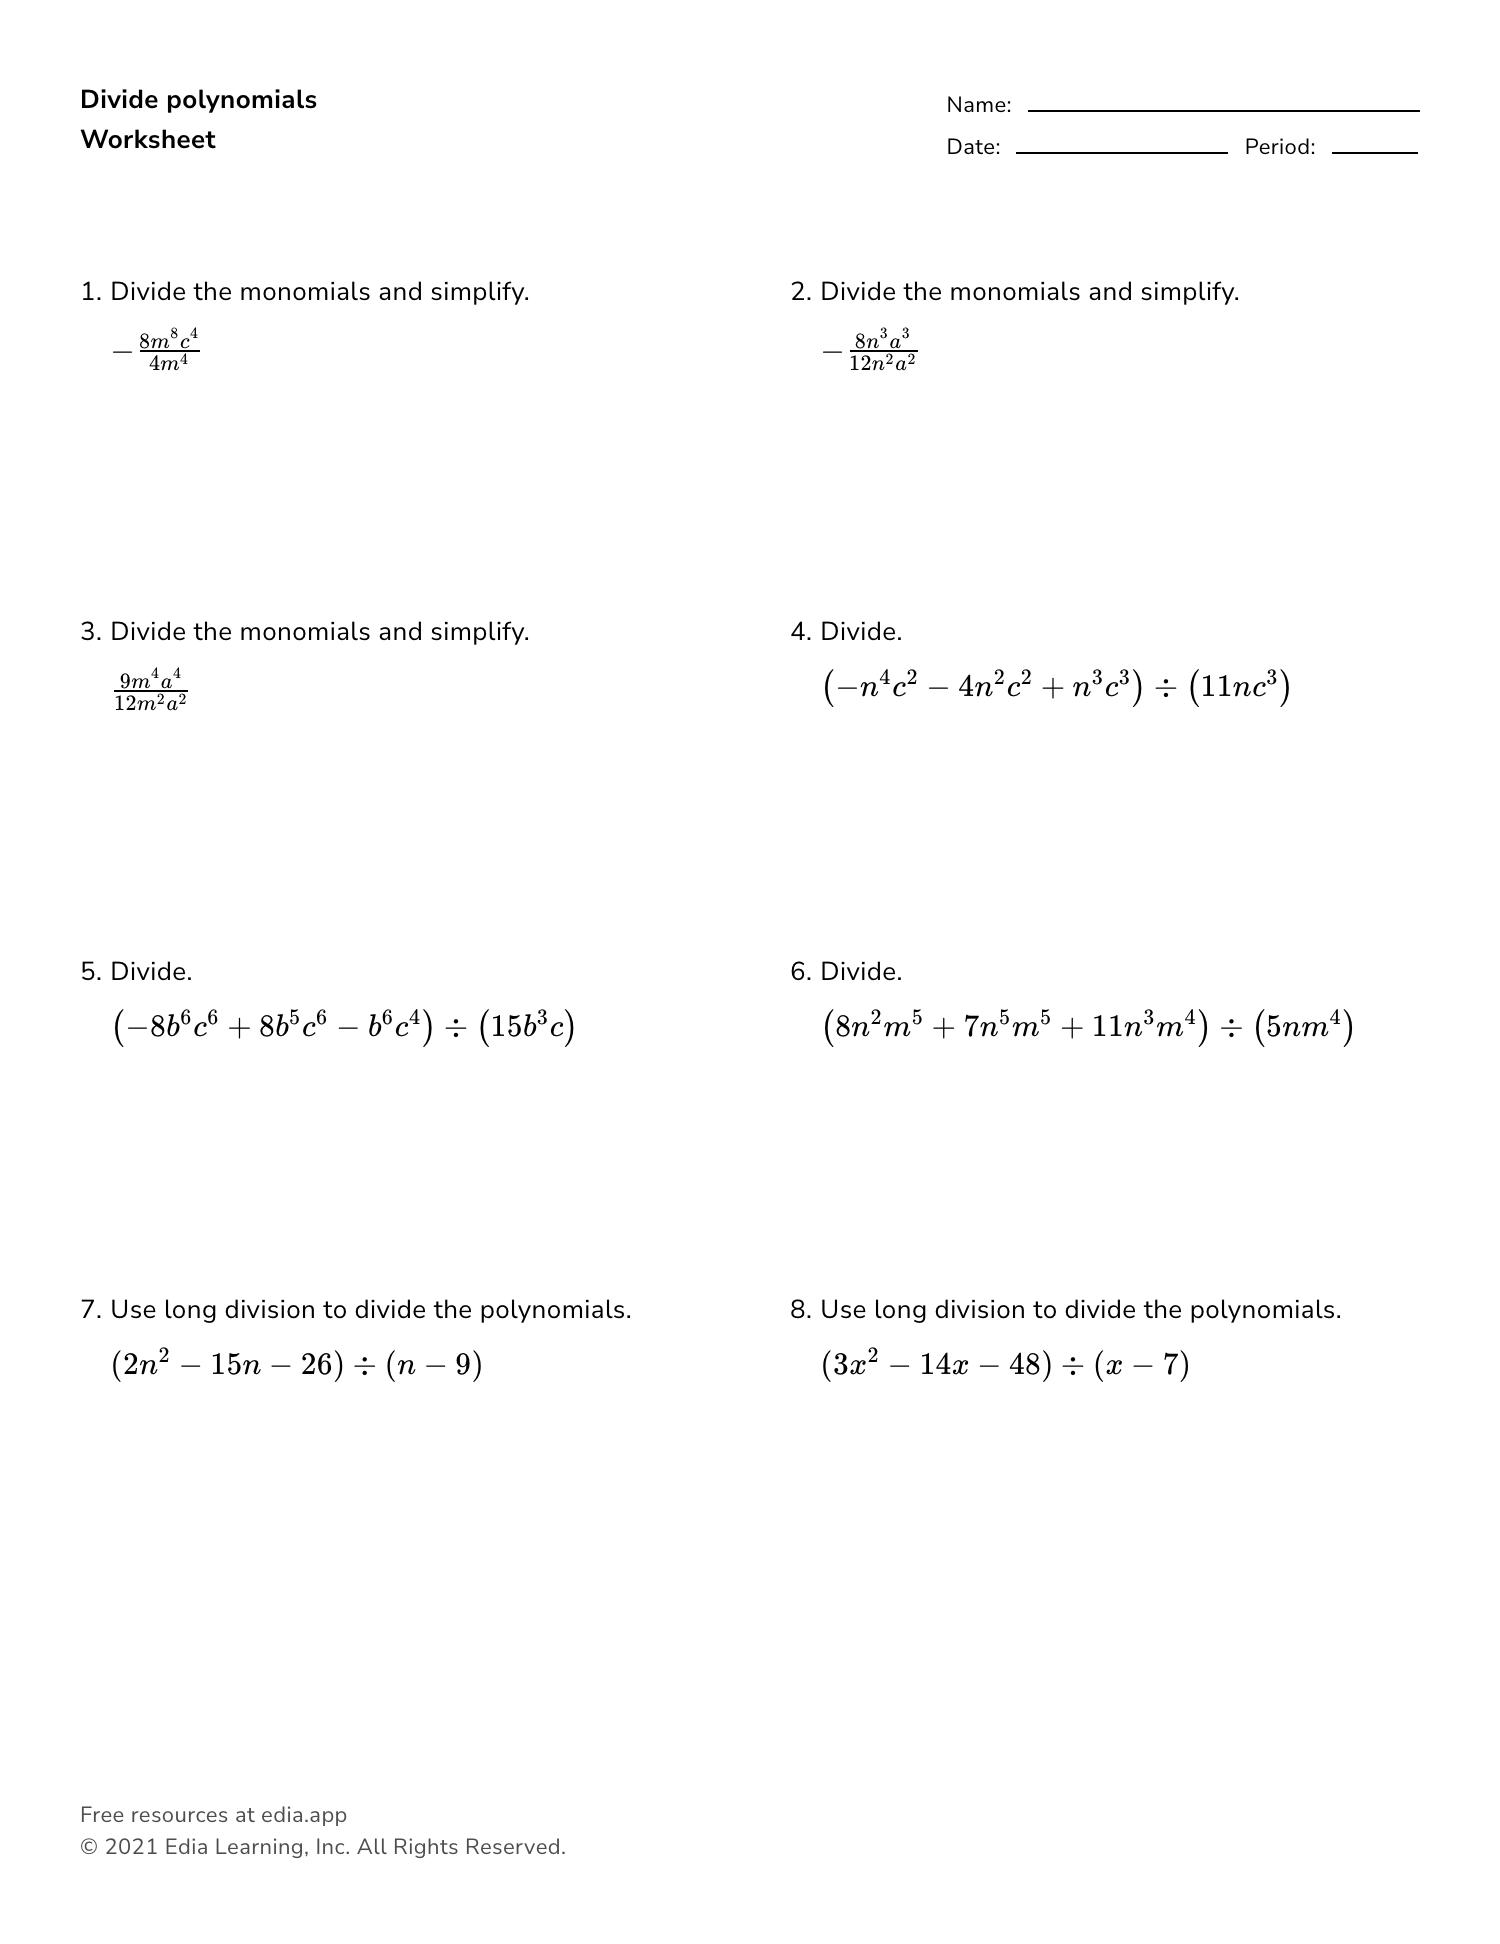 polynomial-long-division-worksheet